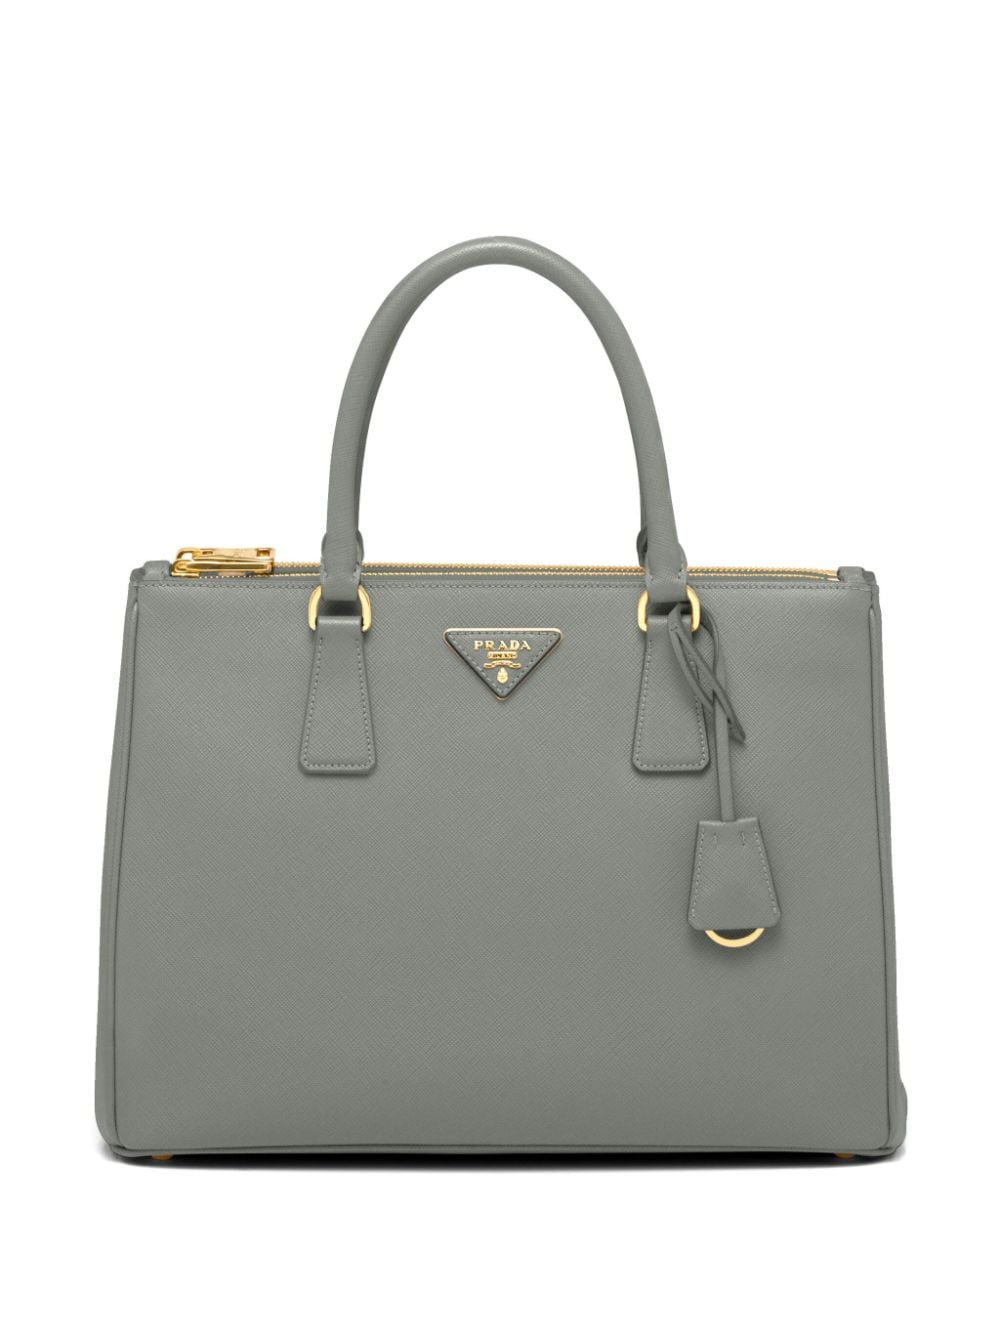 Prada Large Galleria Saffiano Leather Handbag In Green